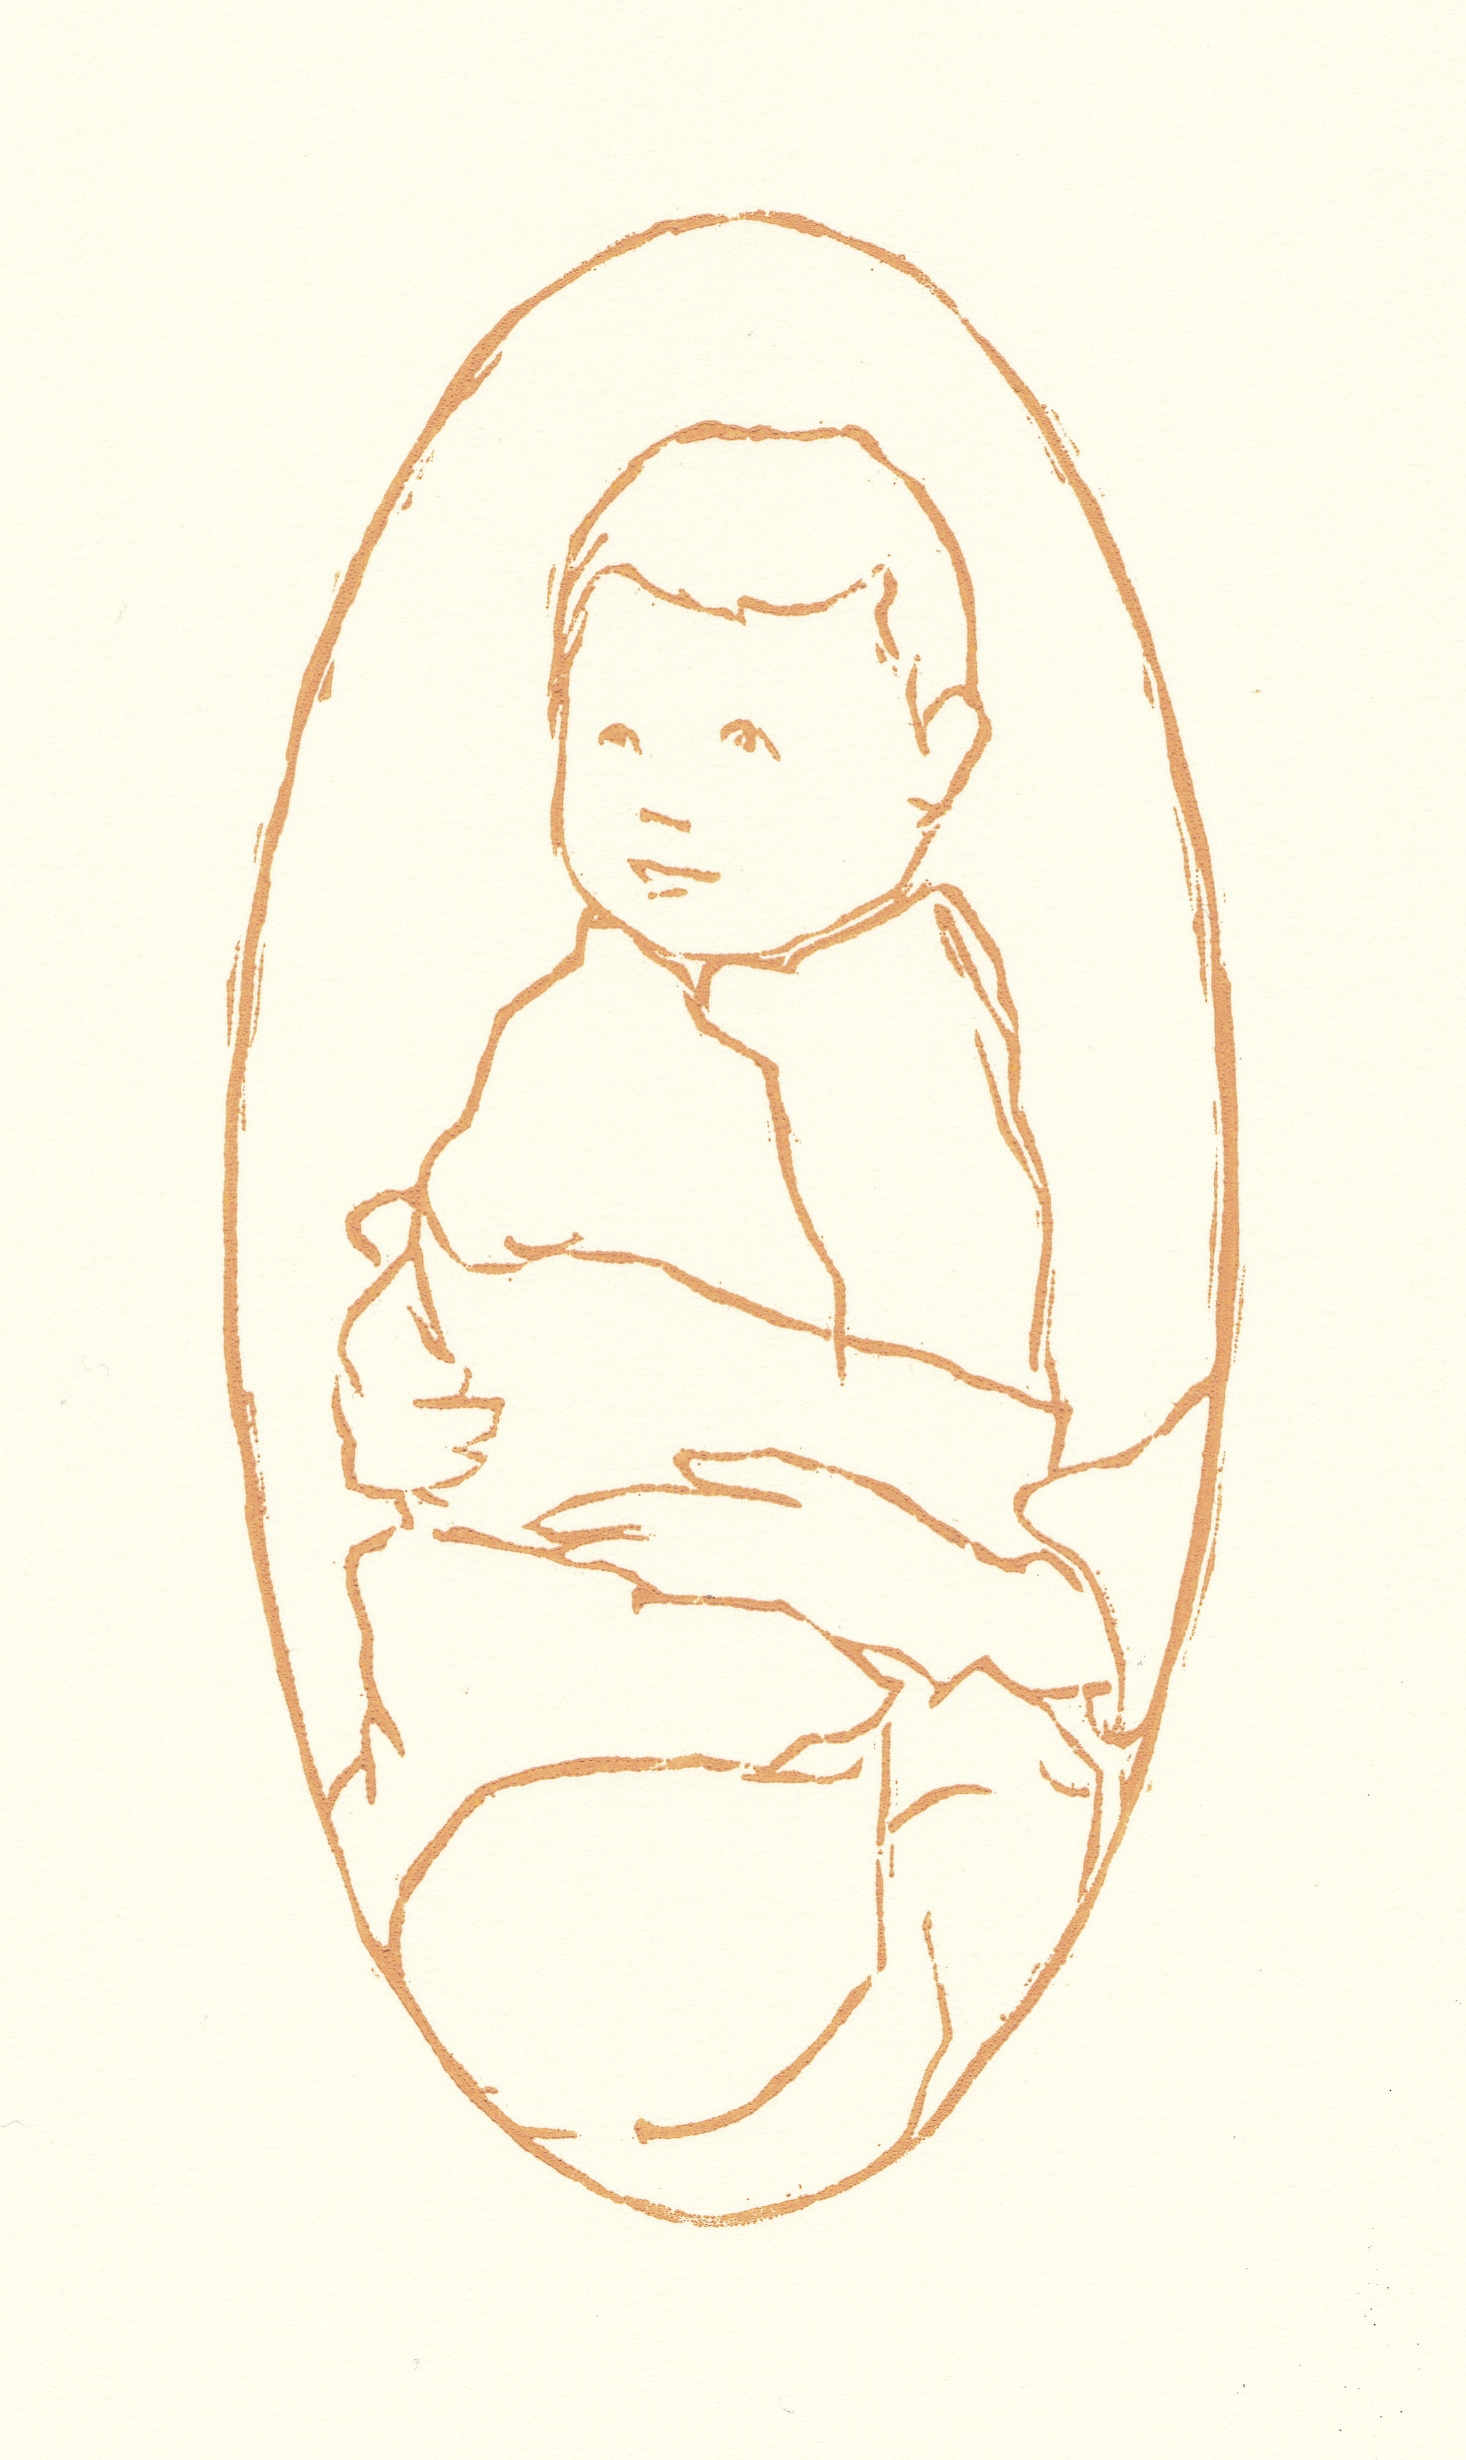   baby   woodblock print  edition of 35  3.5x6.75"  2014 